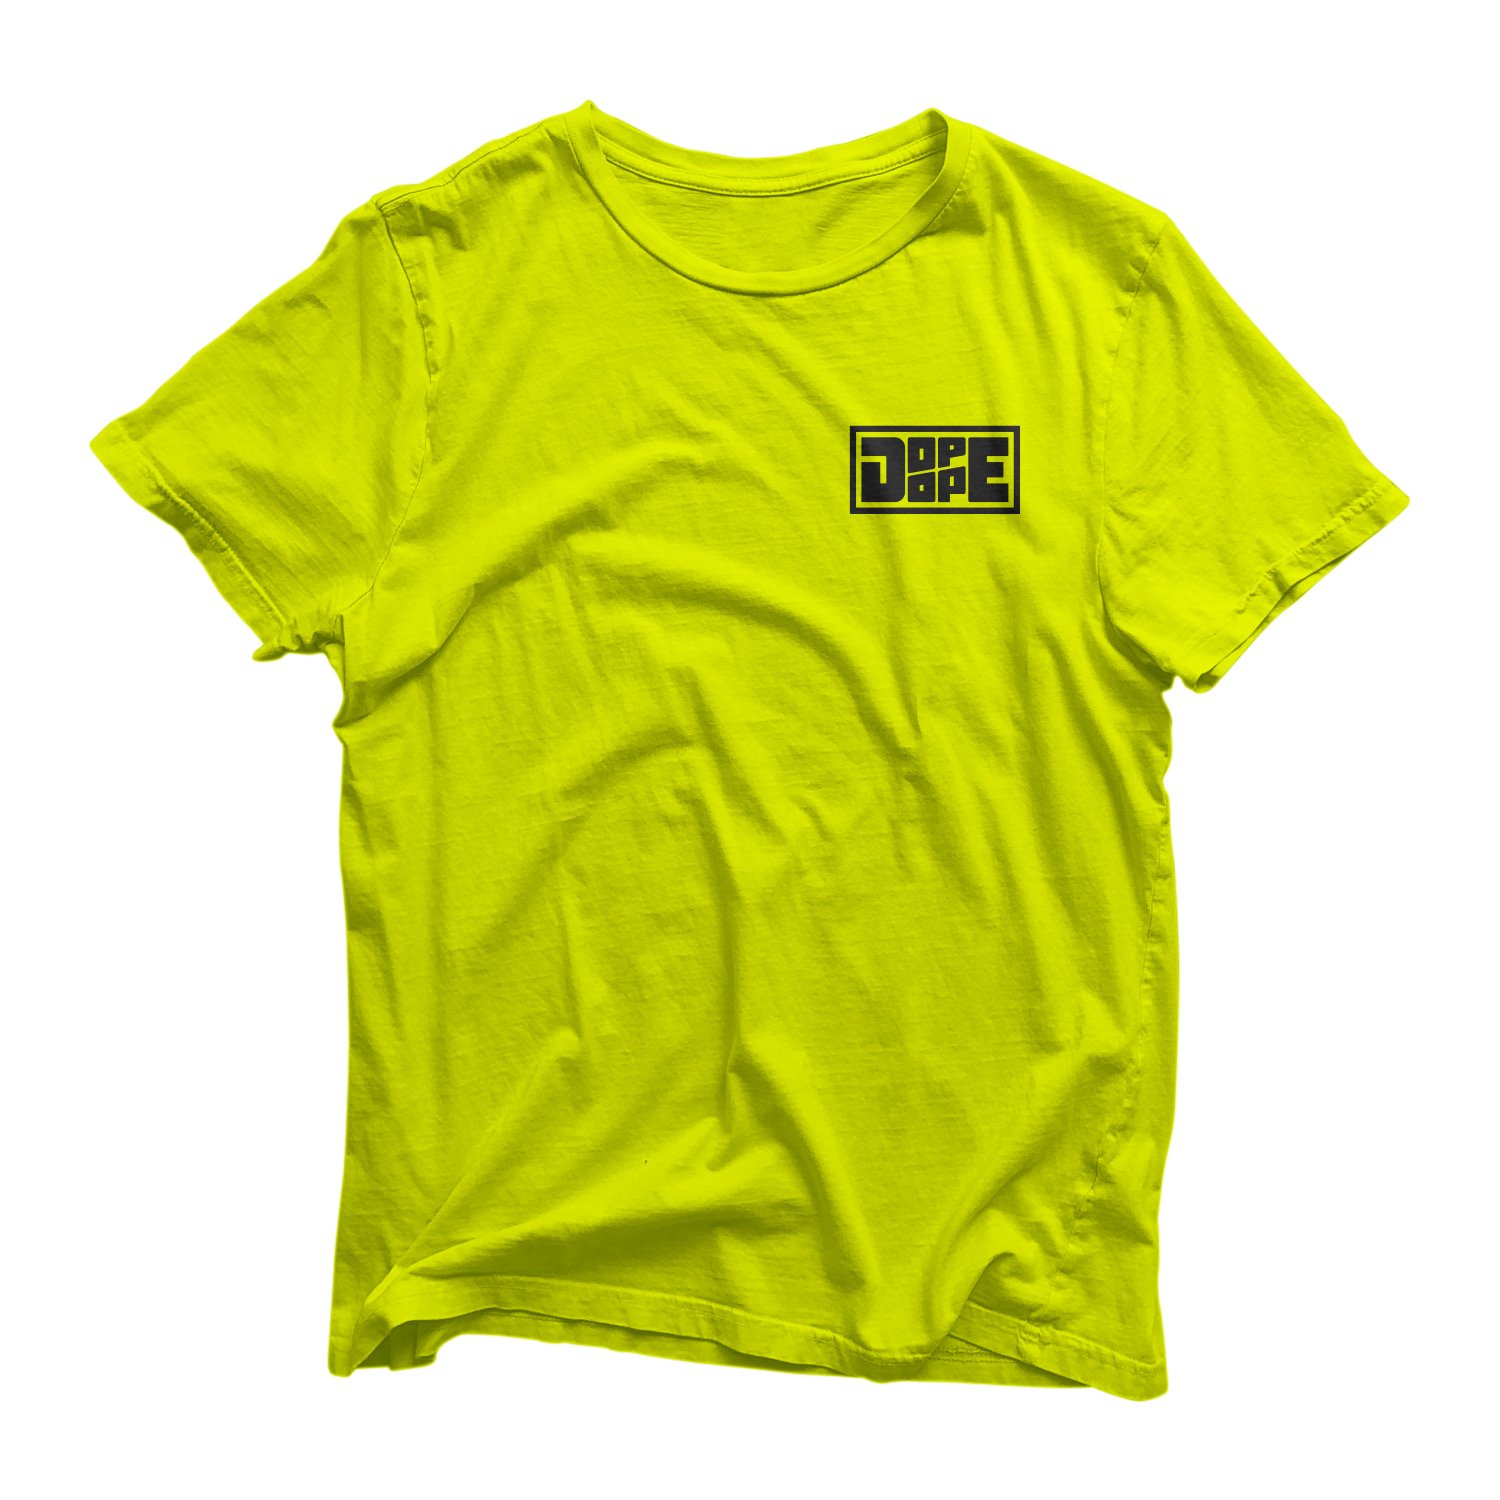 dope_dope_shirt_front_1.jpg